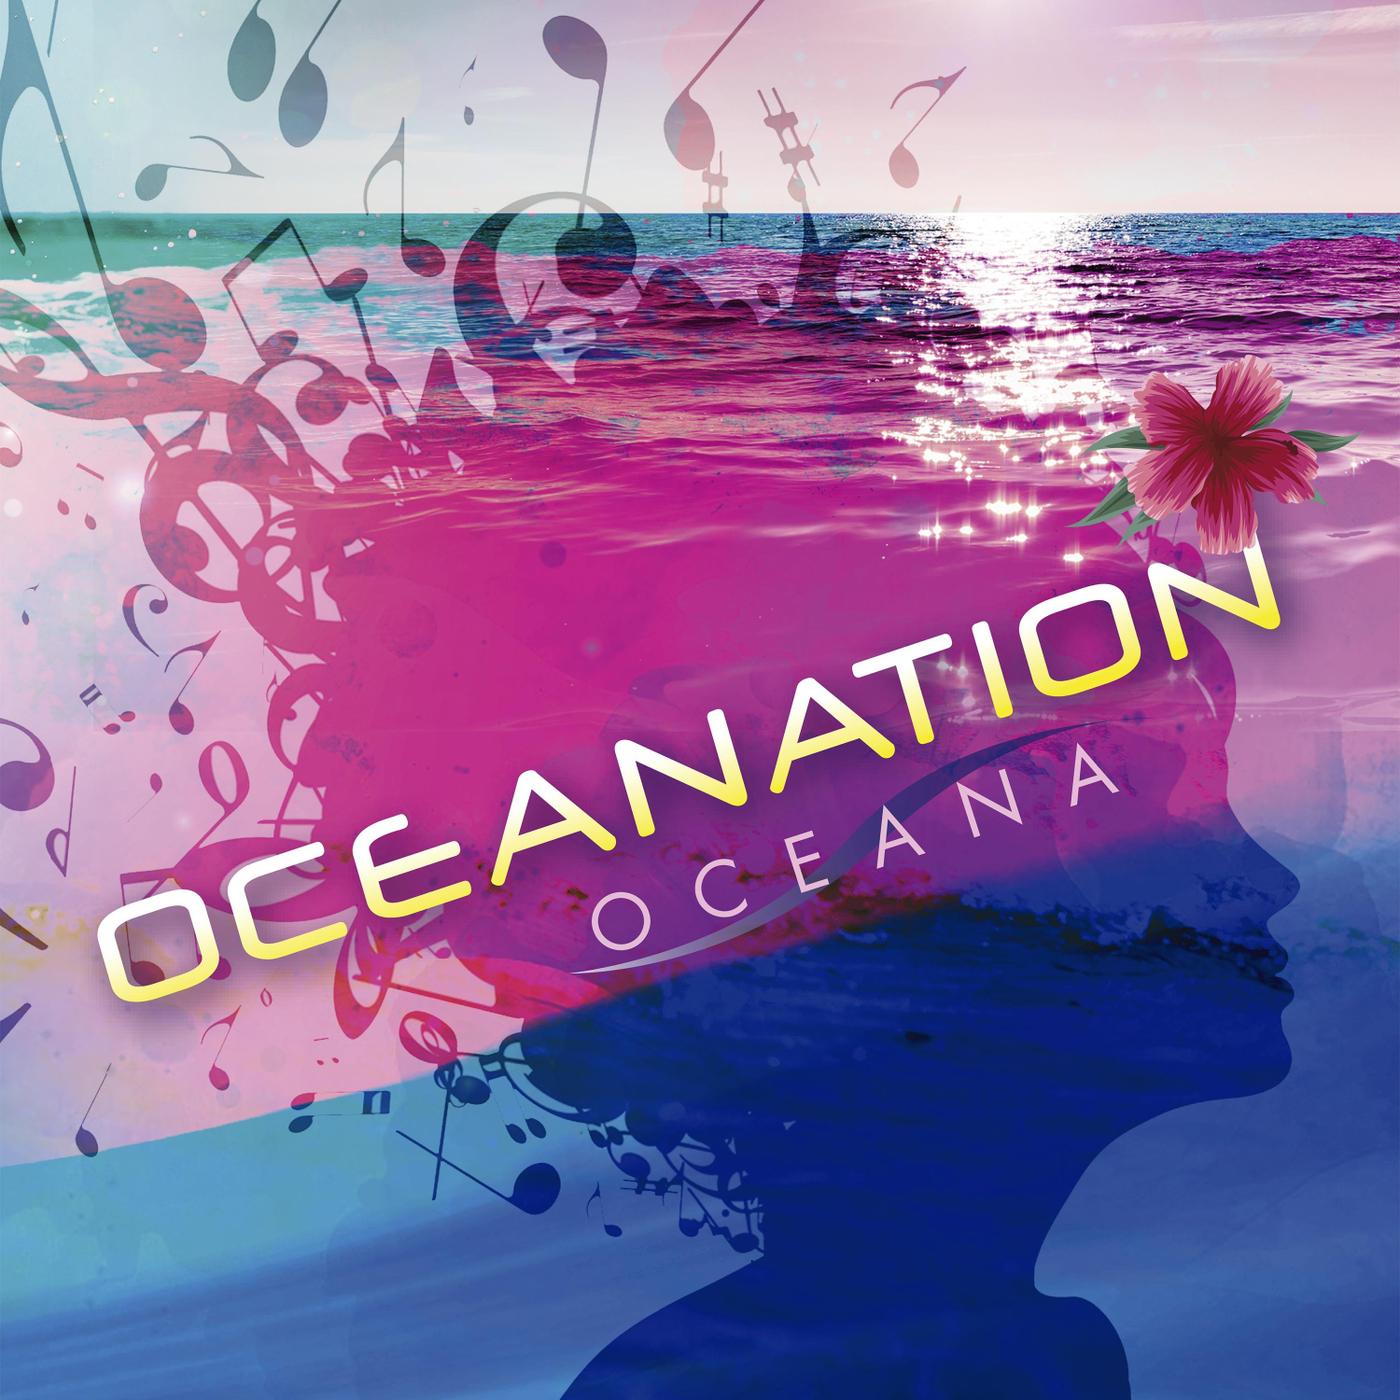 Oceana - Oceana (Spanish Version)